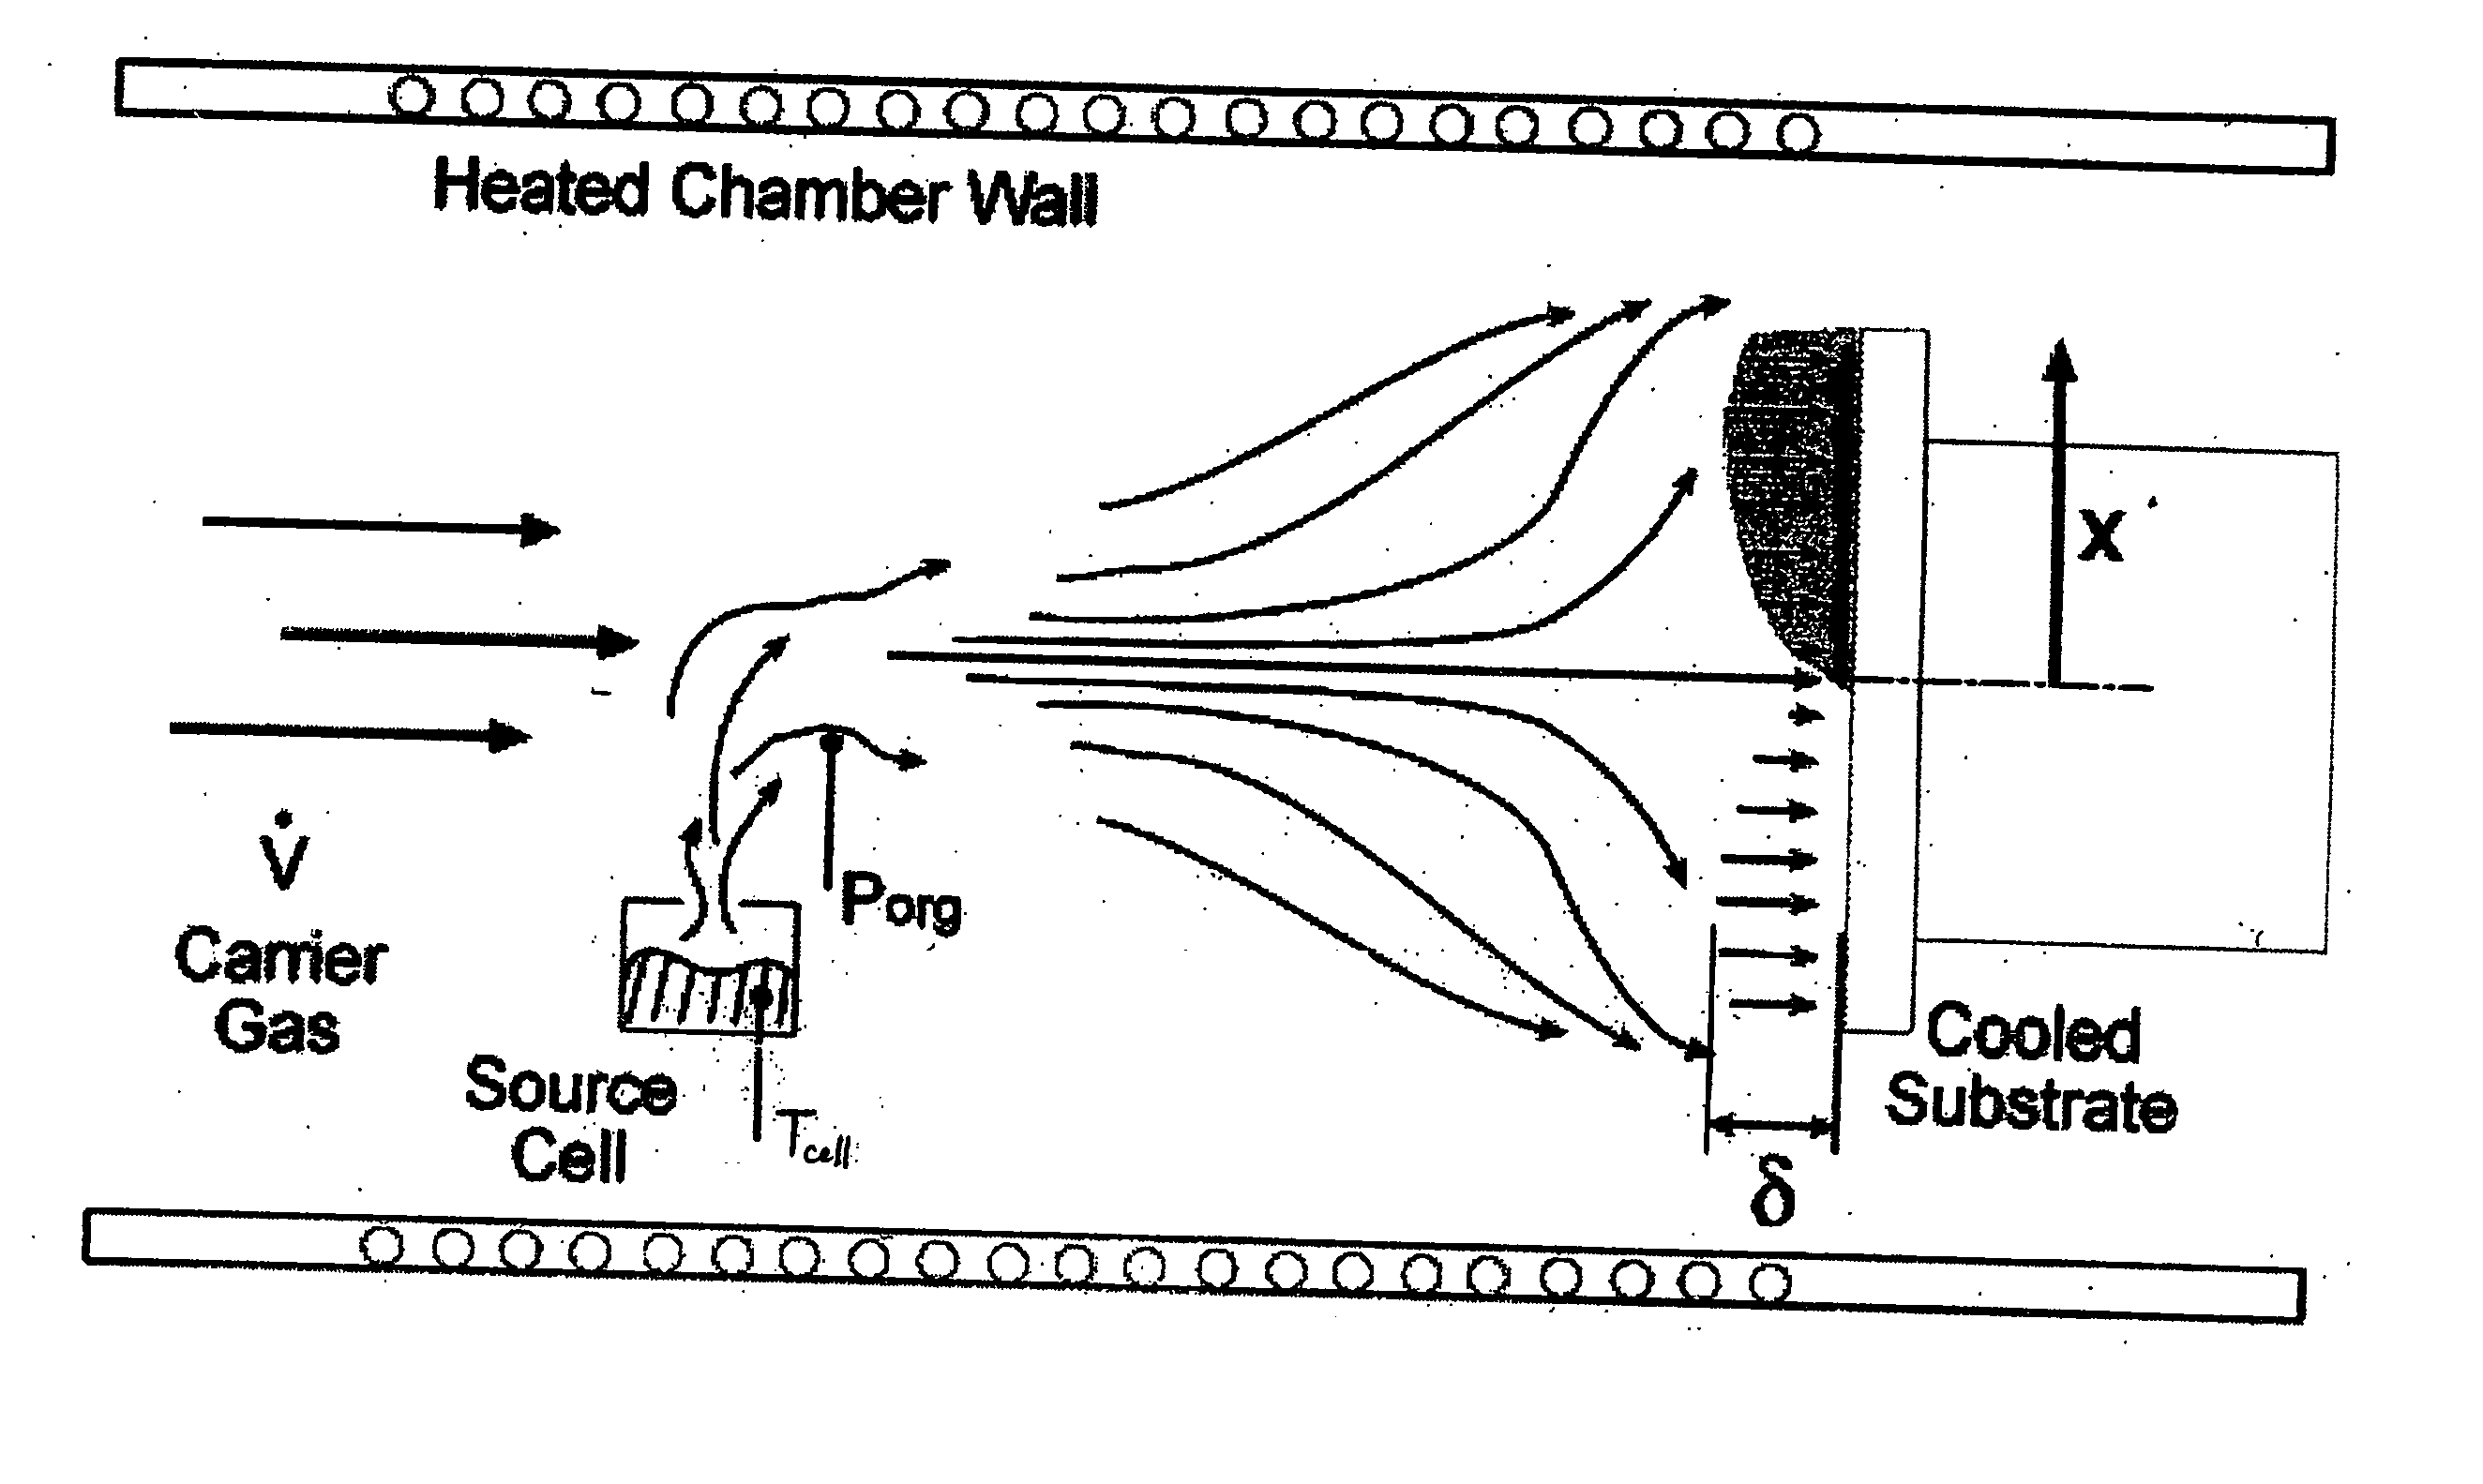 Method of fabricating an optoelectronic device having a bulk heterojunction